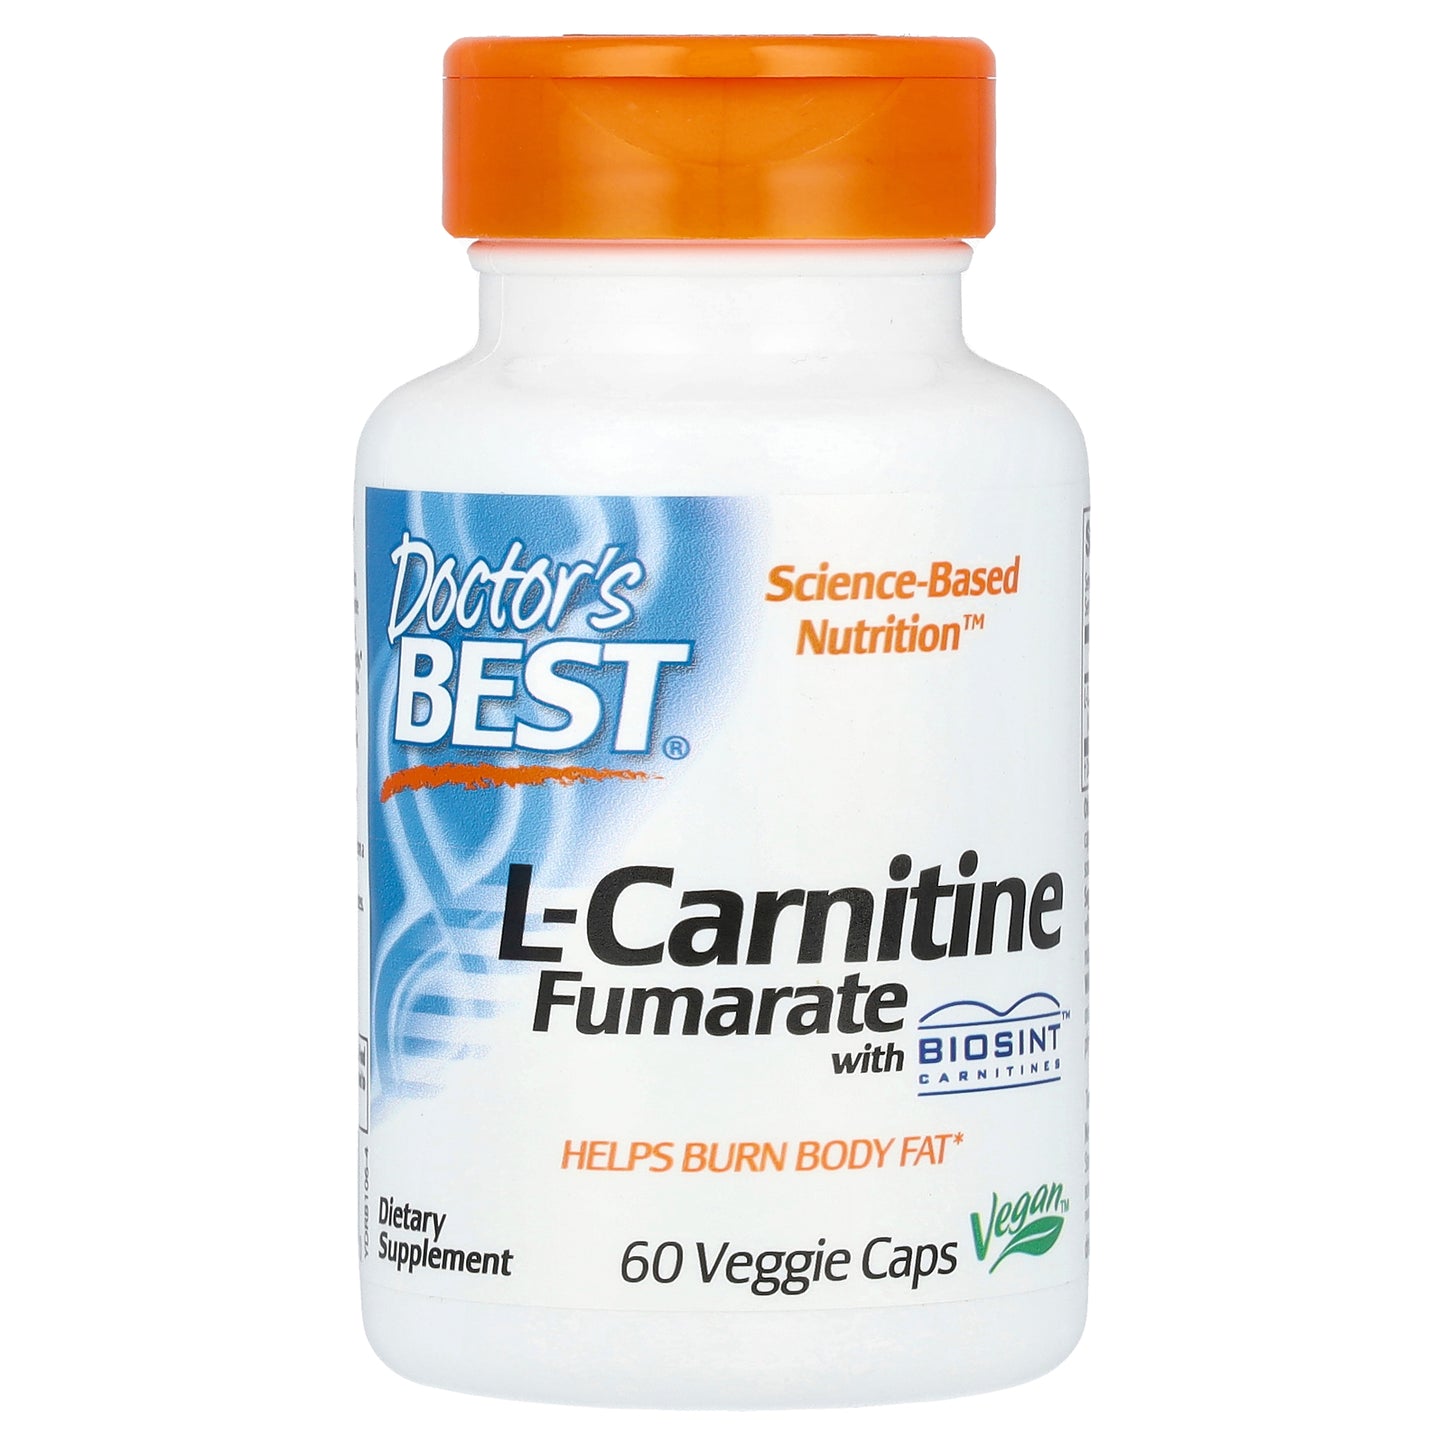 Doctor's Best L-Carnitine Fumarate with Biosint Carnitines, 855 mg, 60 Veggie Caps